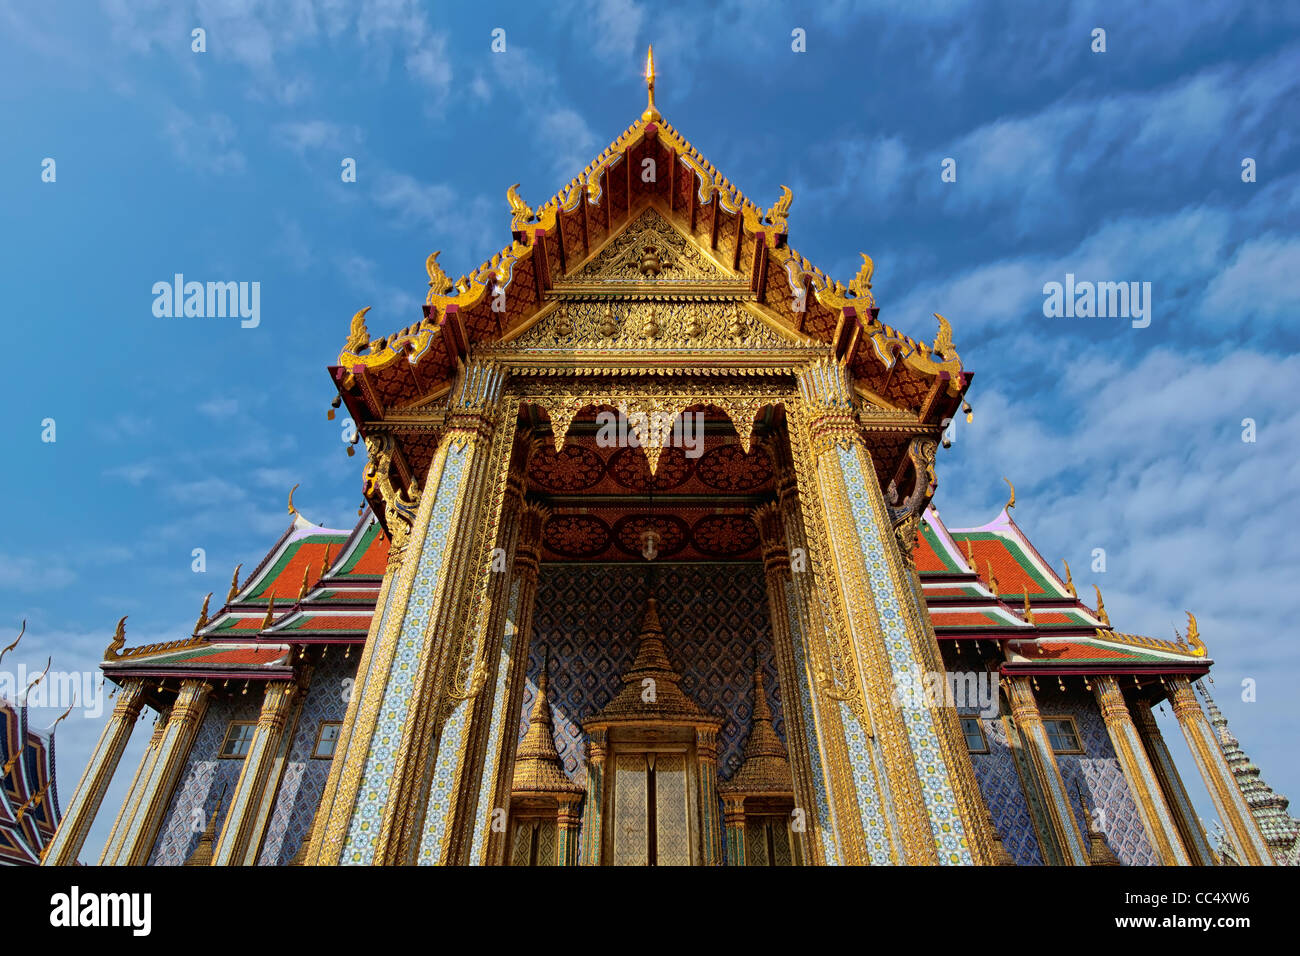 Il Pantheon Reale situato al Tempio del Buddha di Smeraldo (Wat Phra Kaew) a Bangkok, in Thailandia. Foto Stock